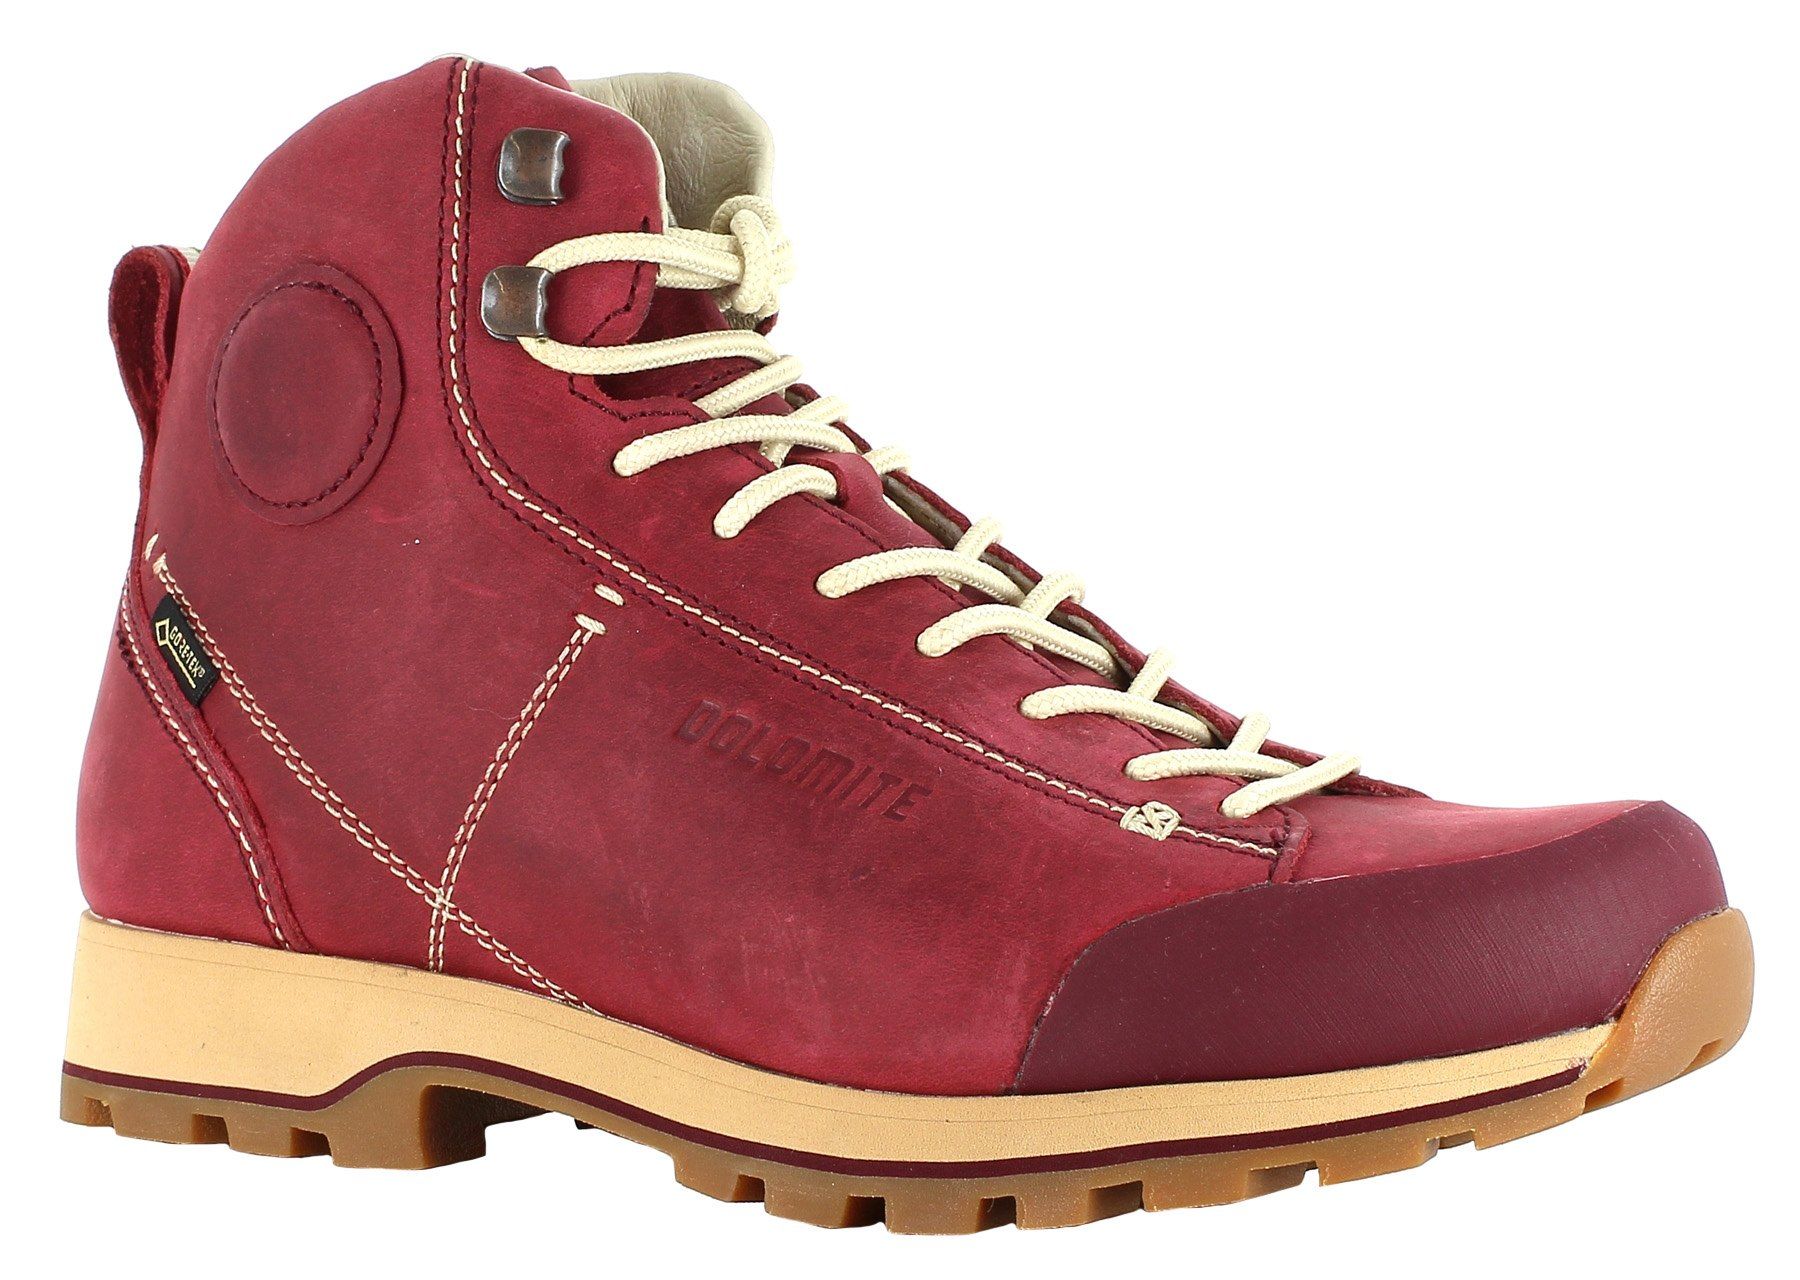 Ботинки Dolomite Cinquantaquattro High FG GTX, burgundy red, 6 UK